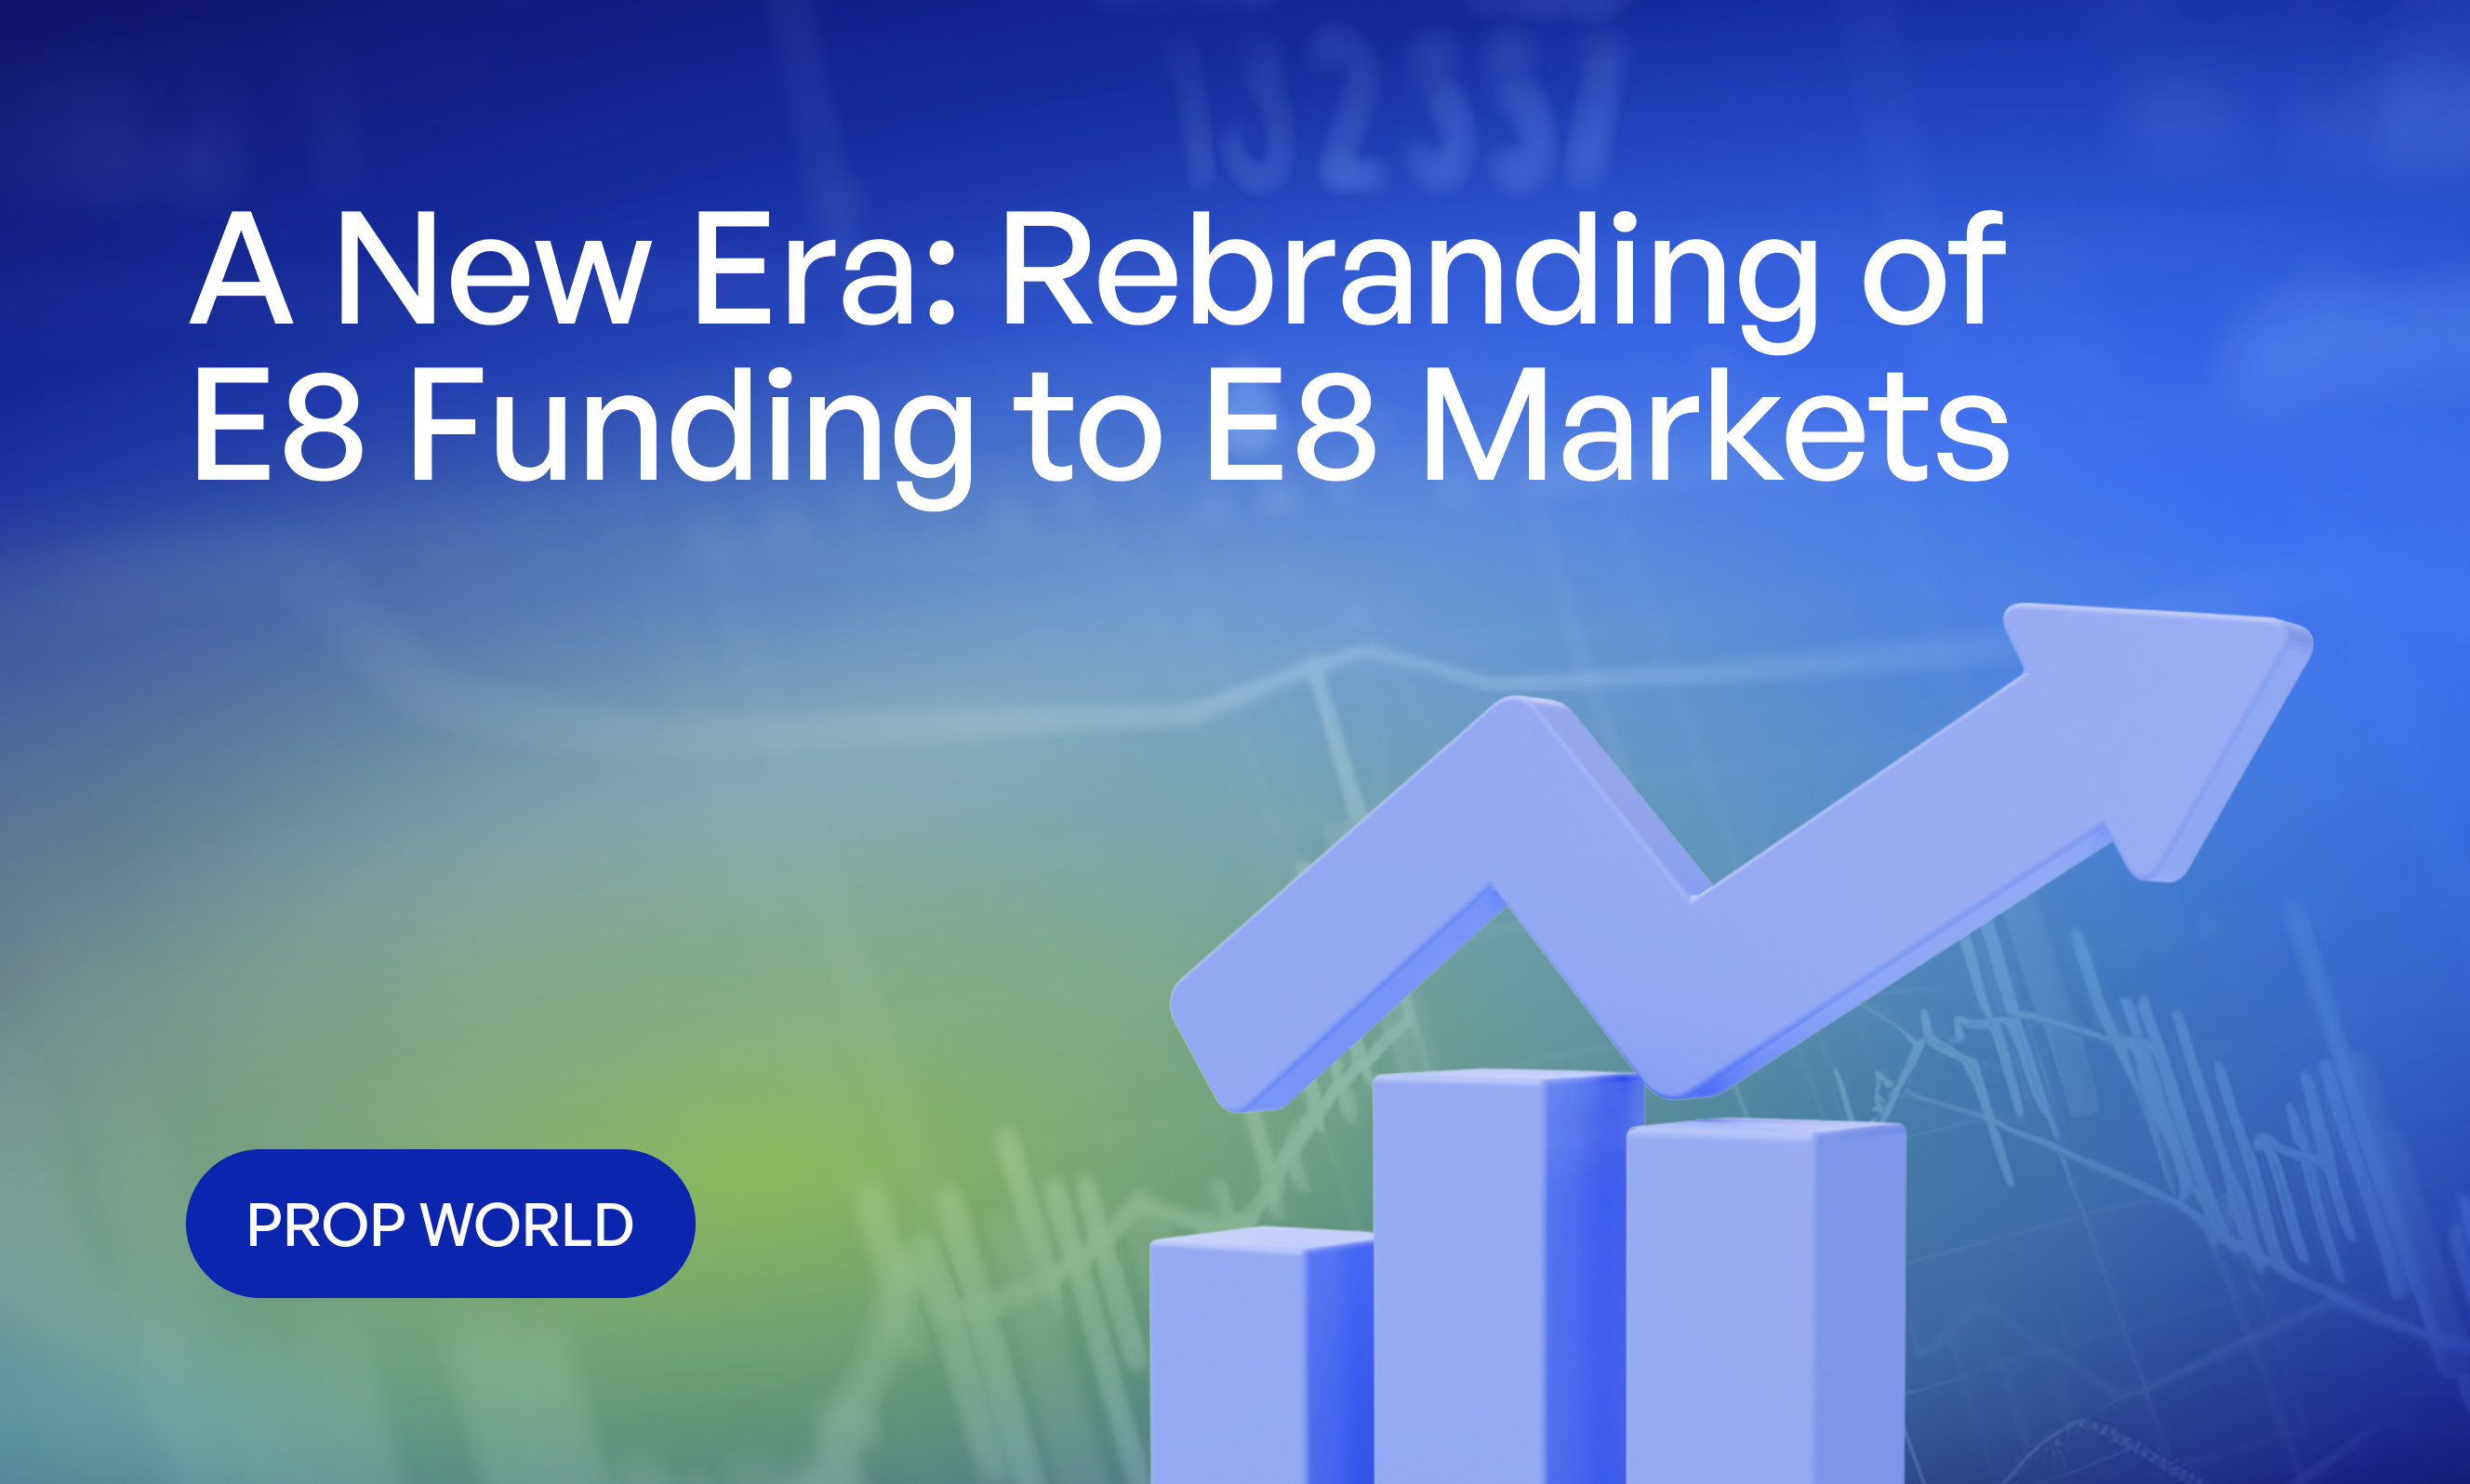 A New Era: Rebranding of E8 Funding to E8 Markets